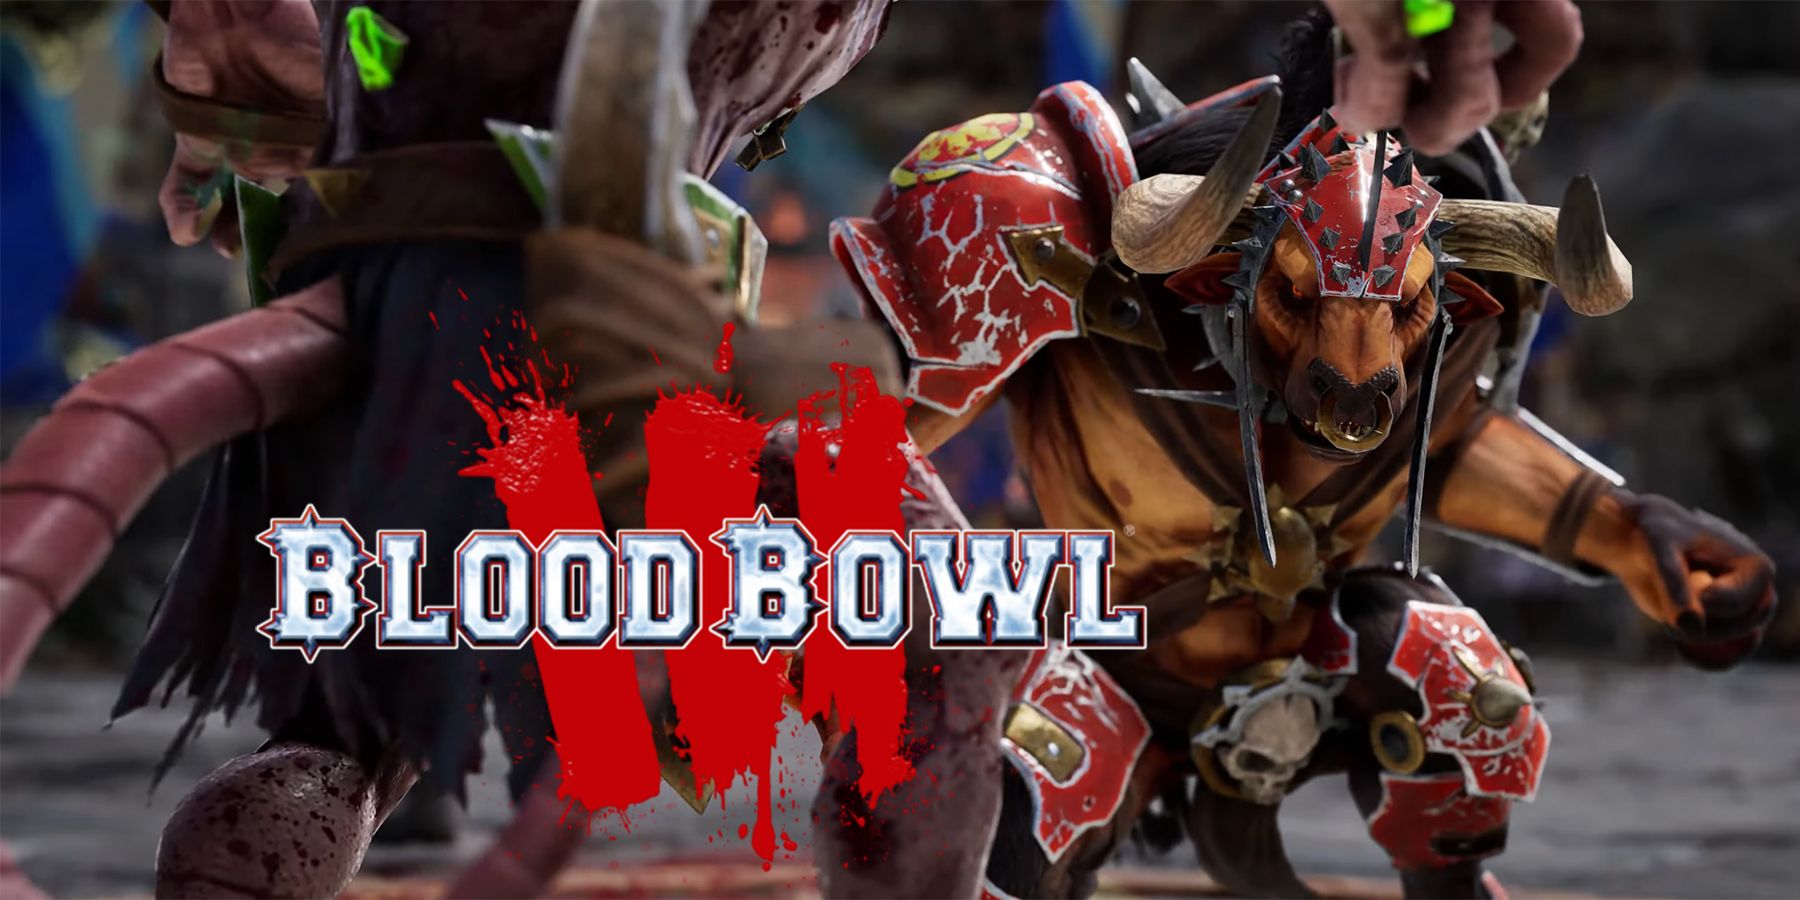 blood bowl 3 release date trailer